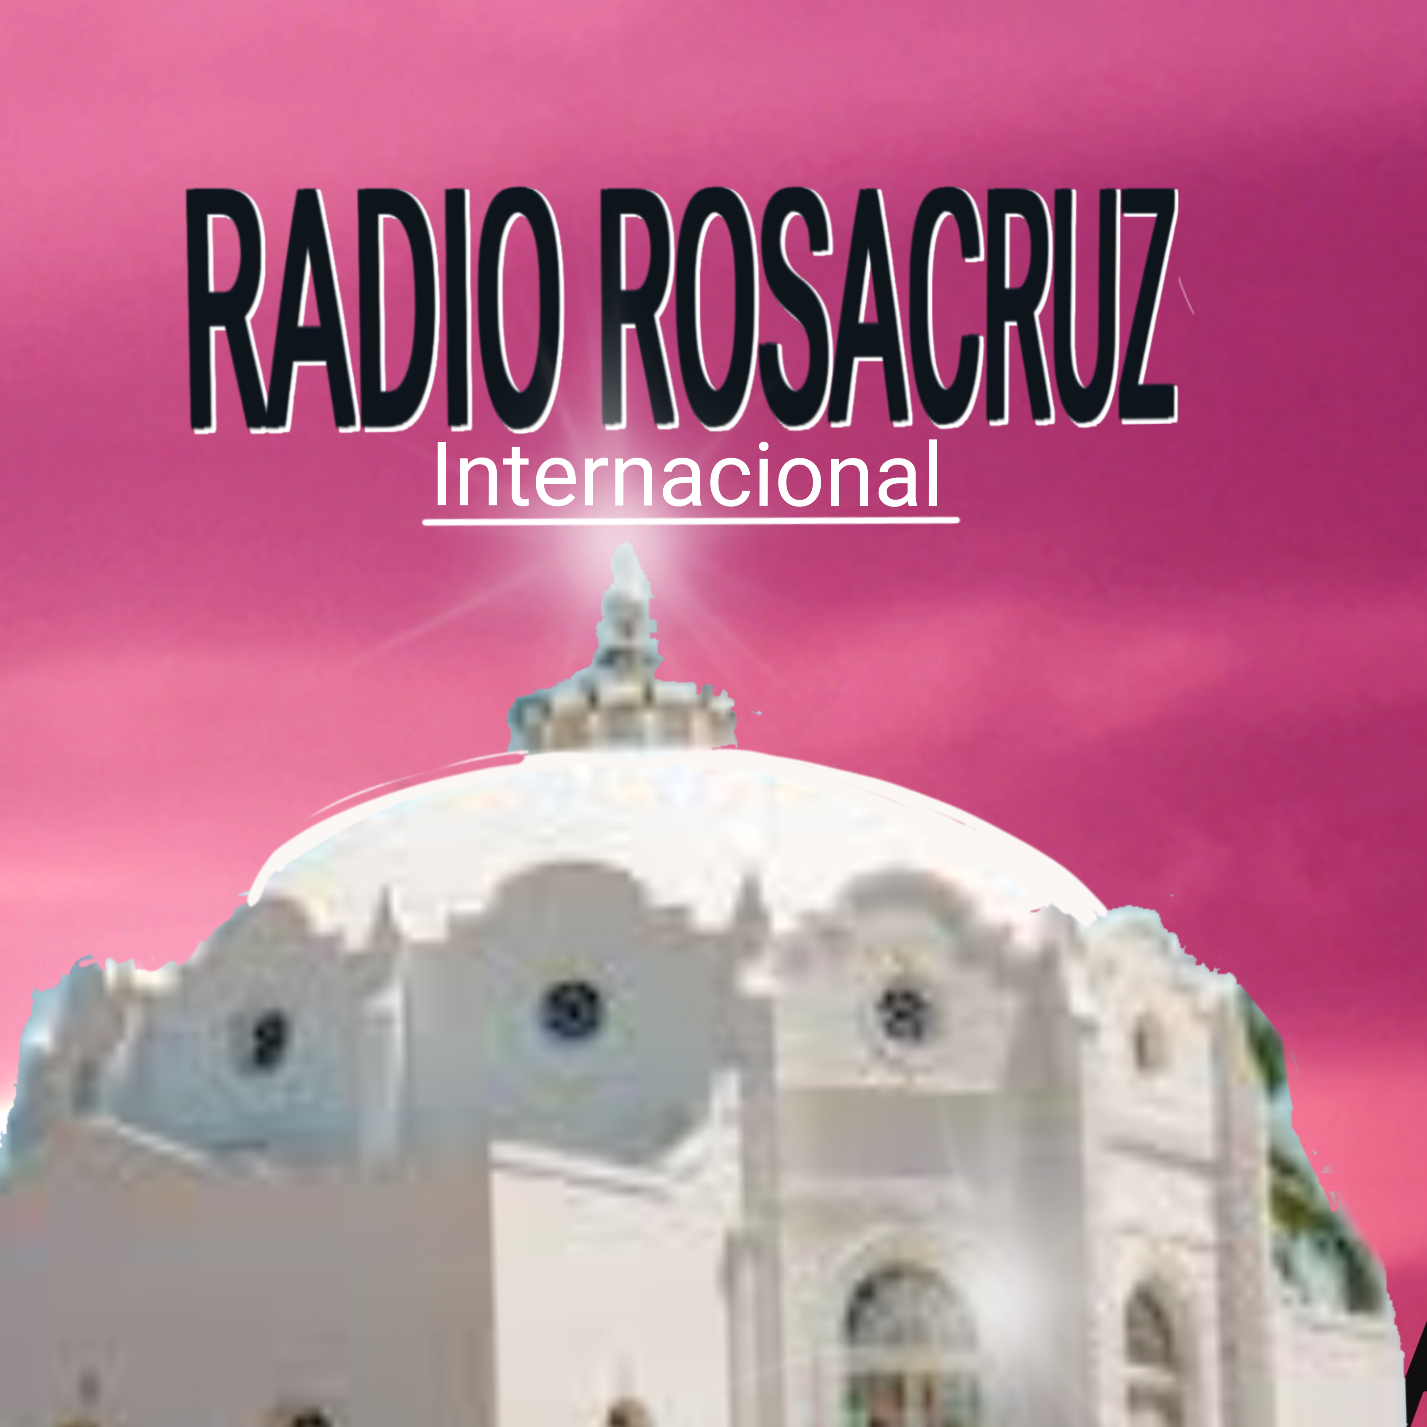 RADIO INTERNACIONAL ROSACRUZ